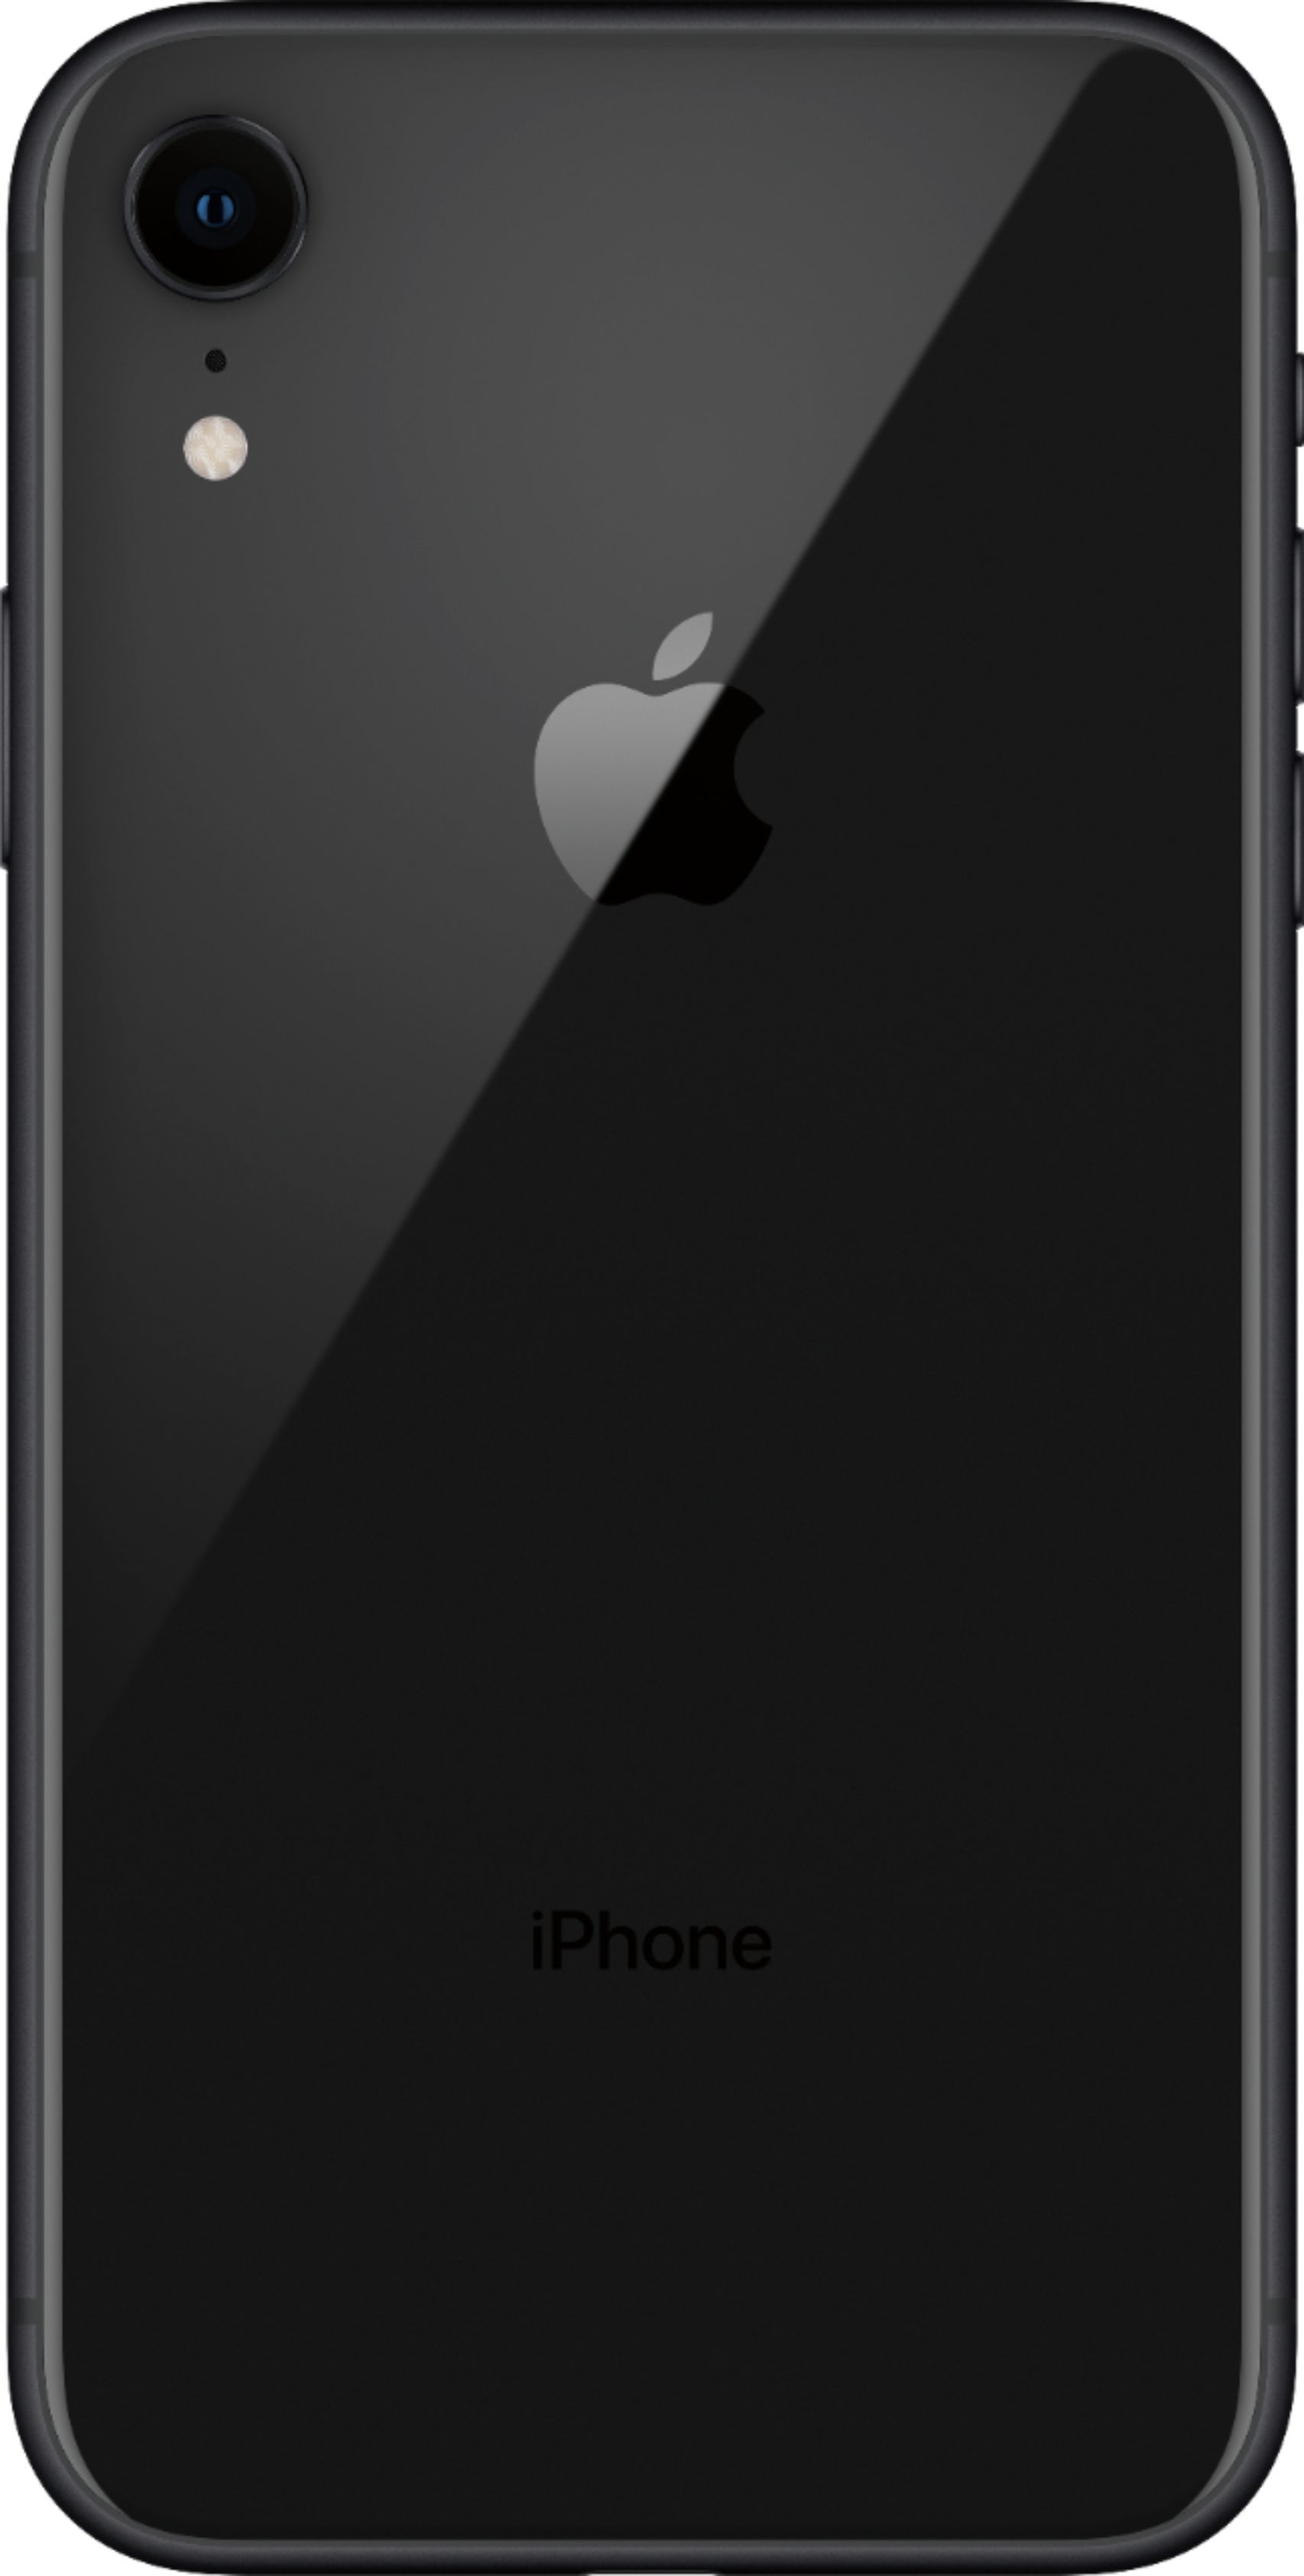 Apple iPhone XR - 64 GB - Black - Unlocked